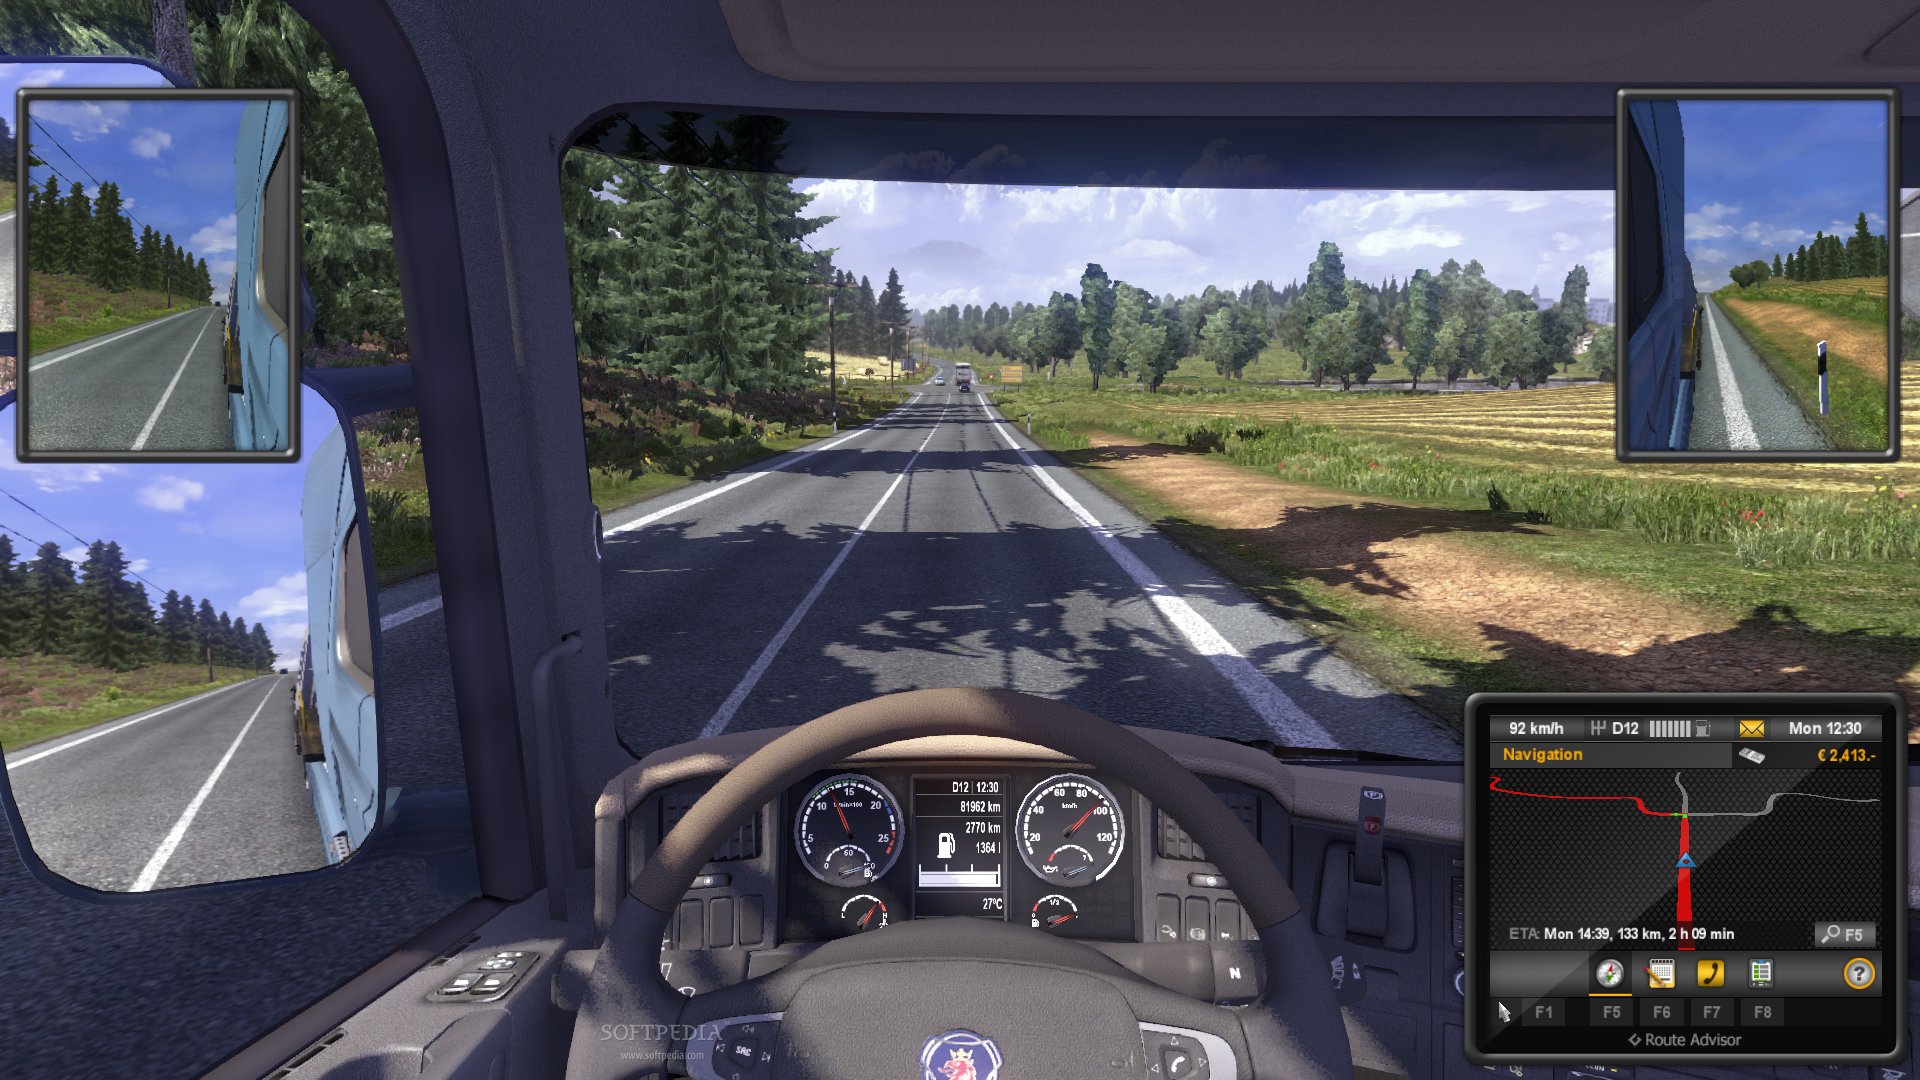 Euro truck simulator 2 game filesystem failed to initialize